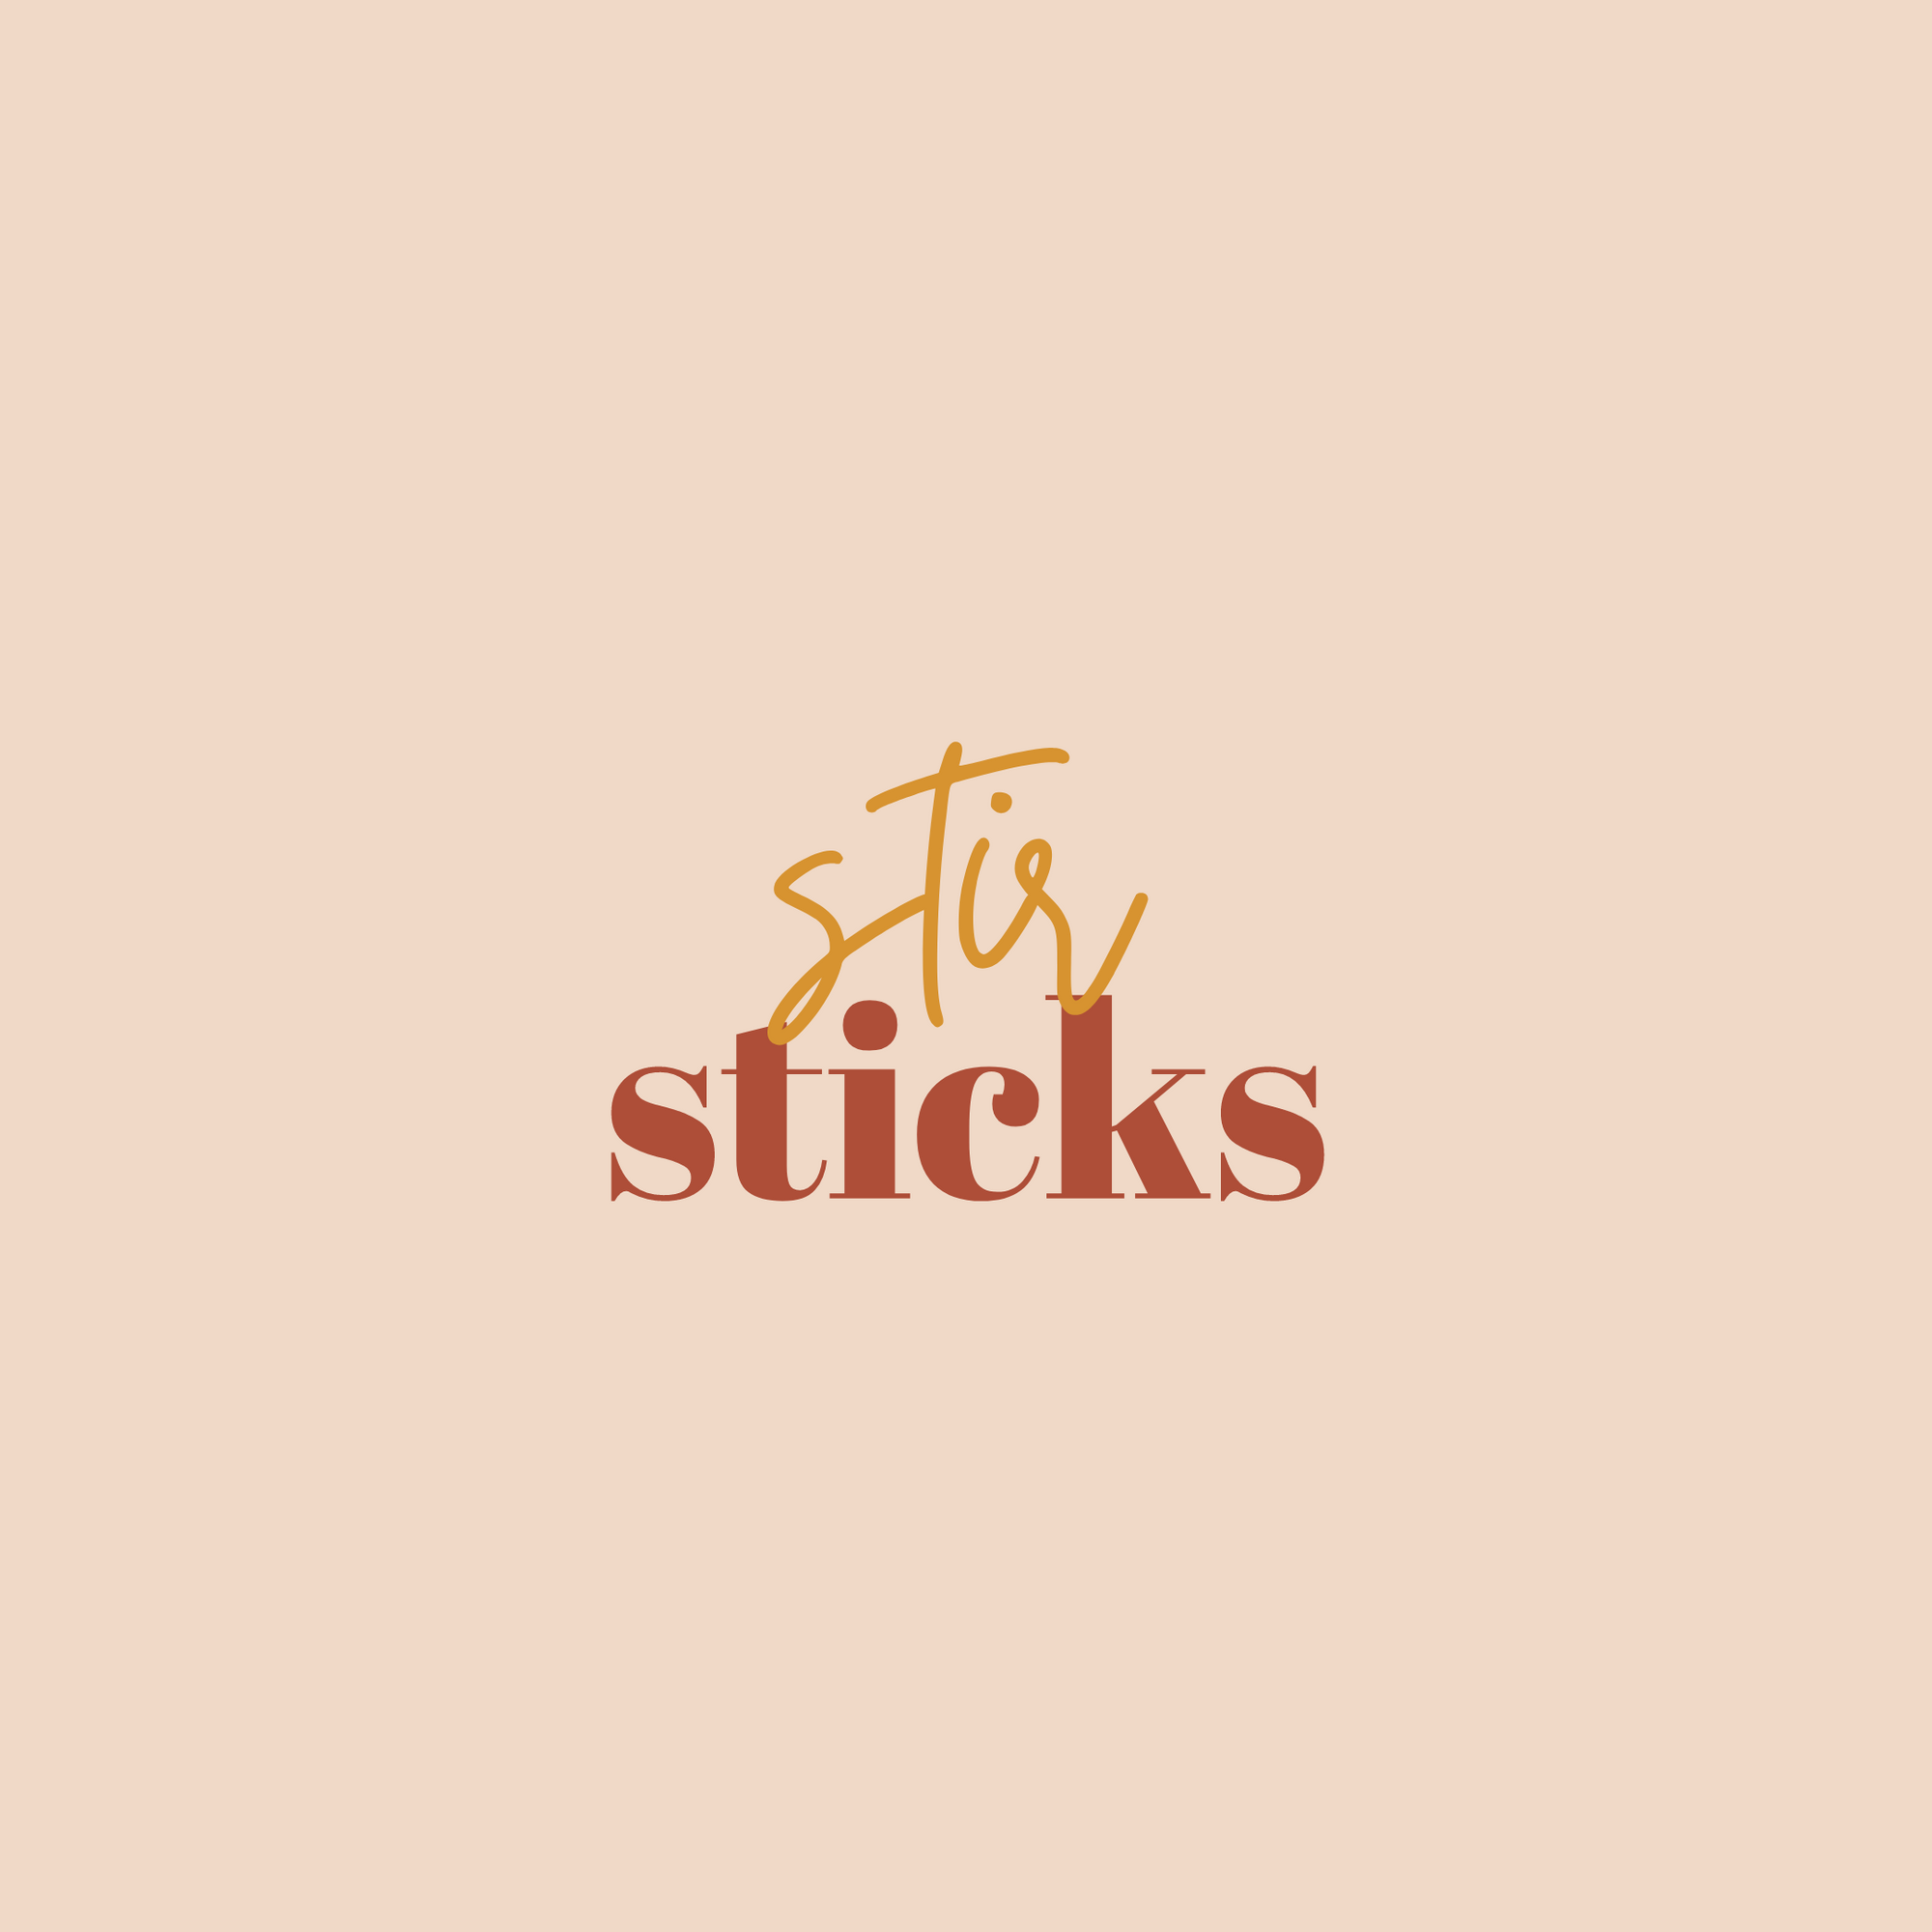 Stir Sticks